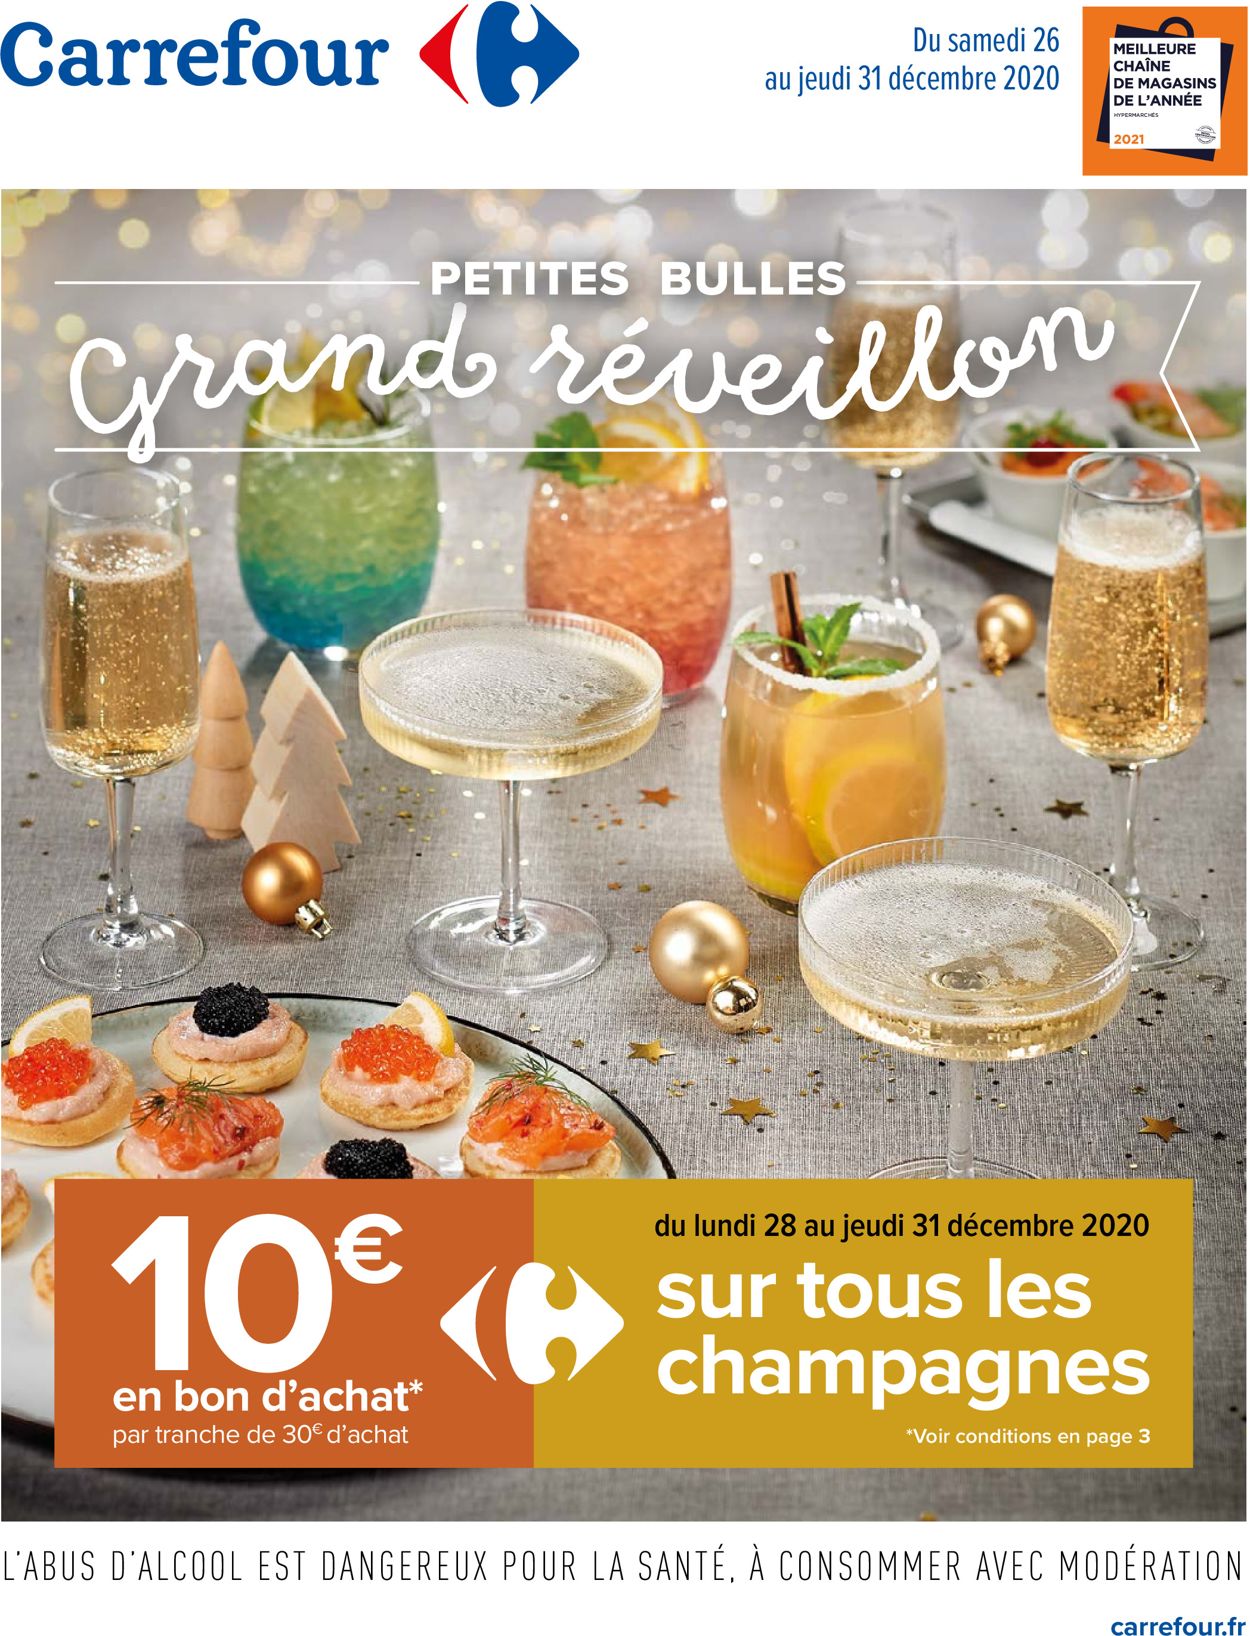 Carrefour Grand ReveIillon Catalogue - 26.12-31.12.2020